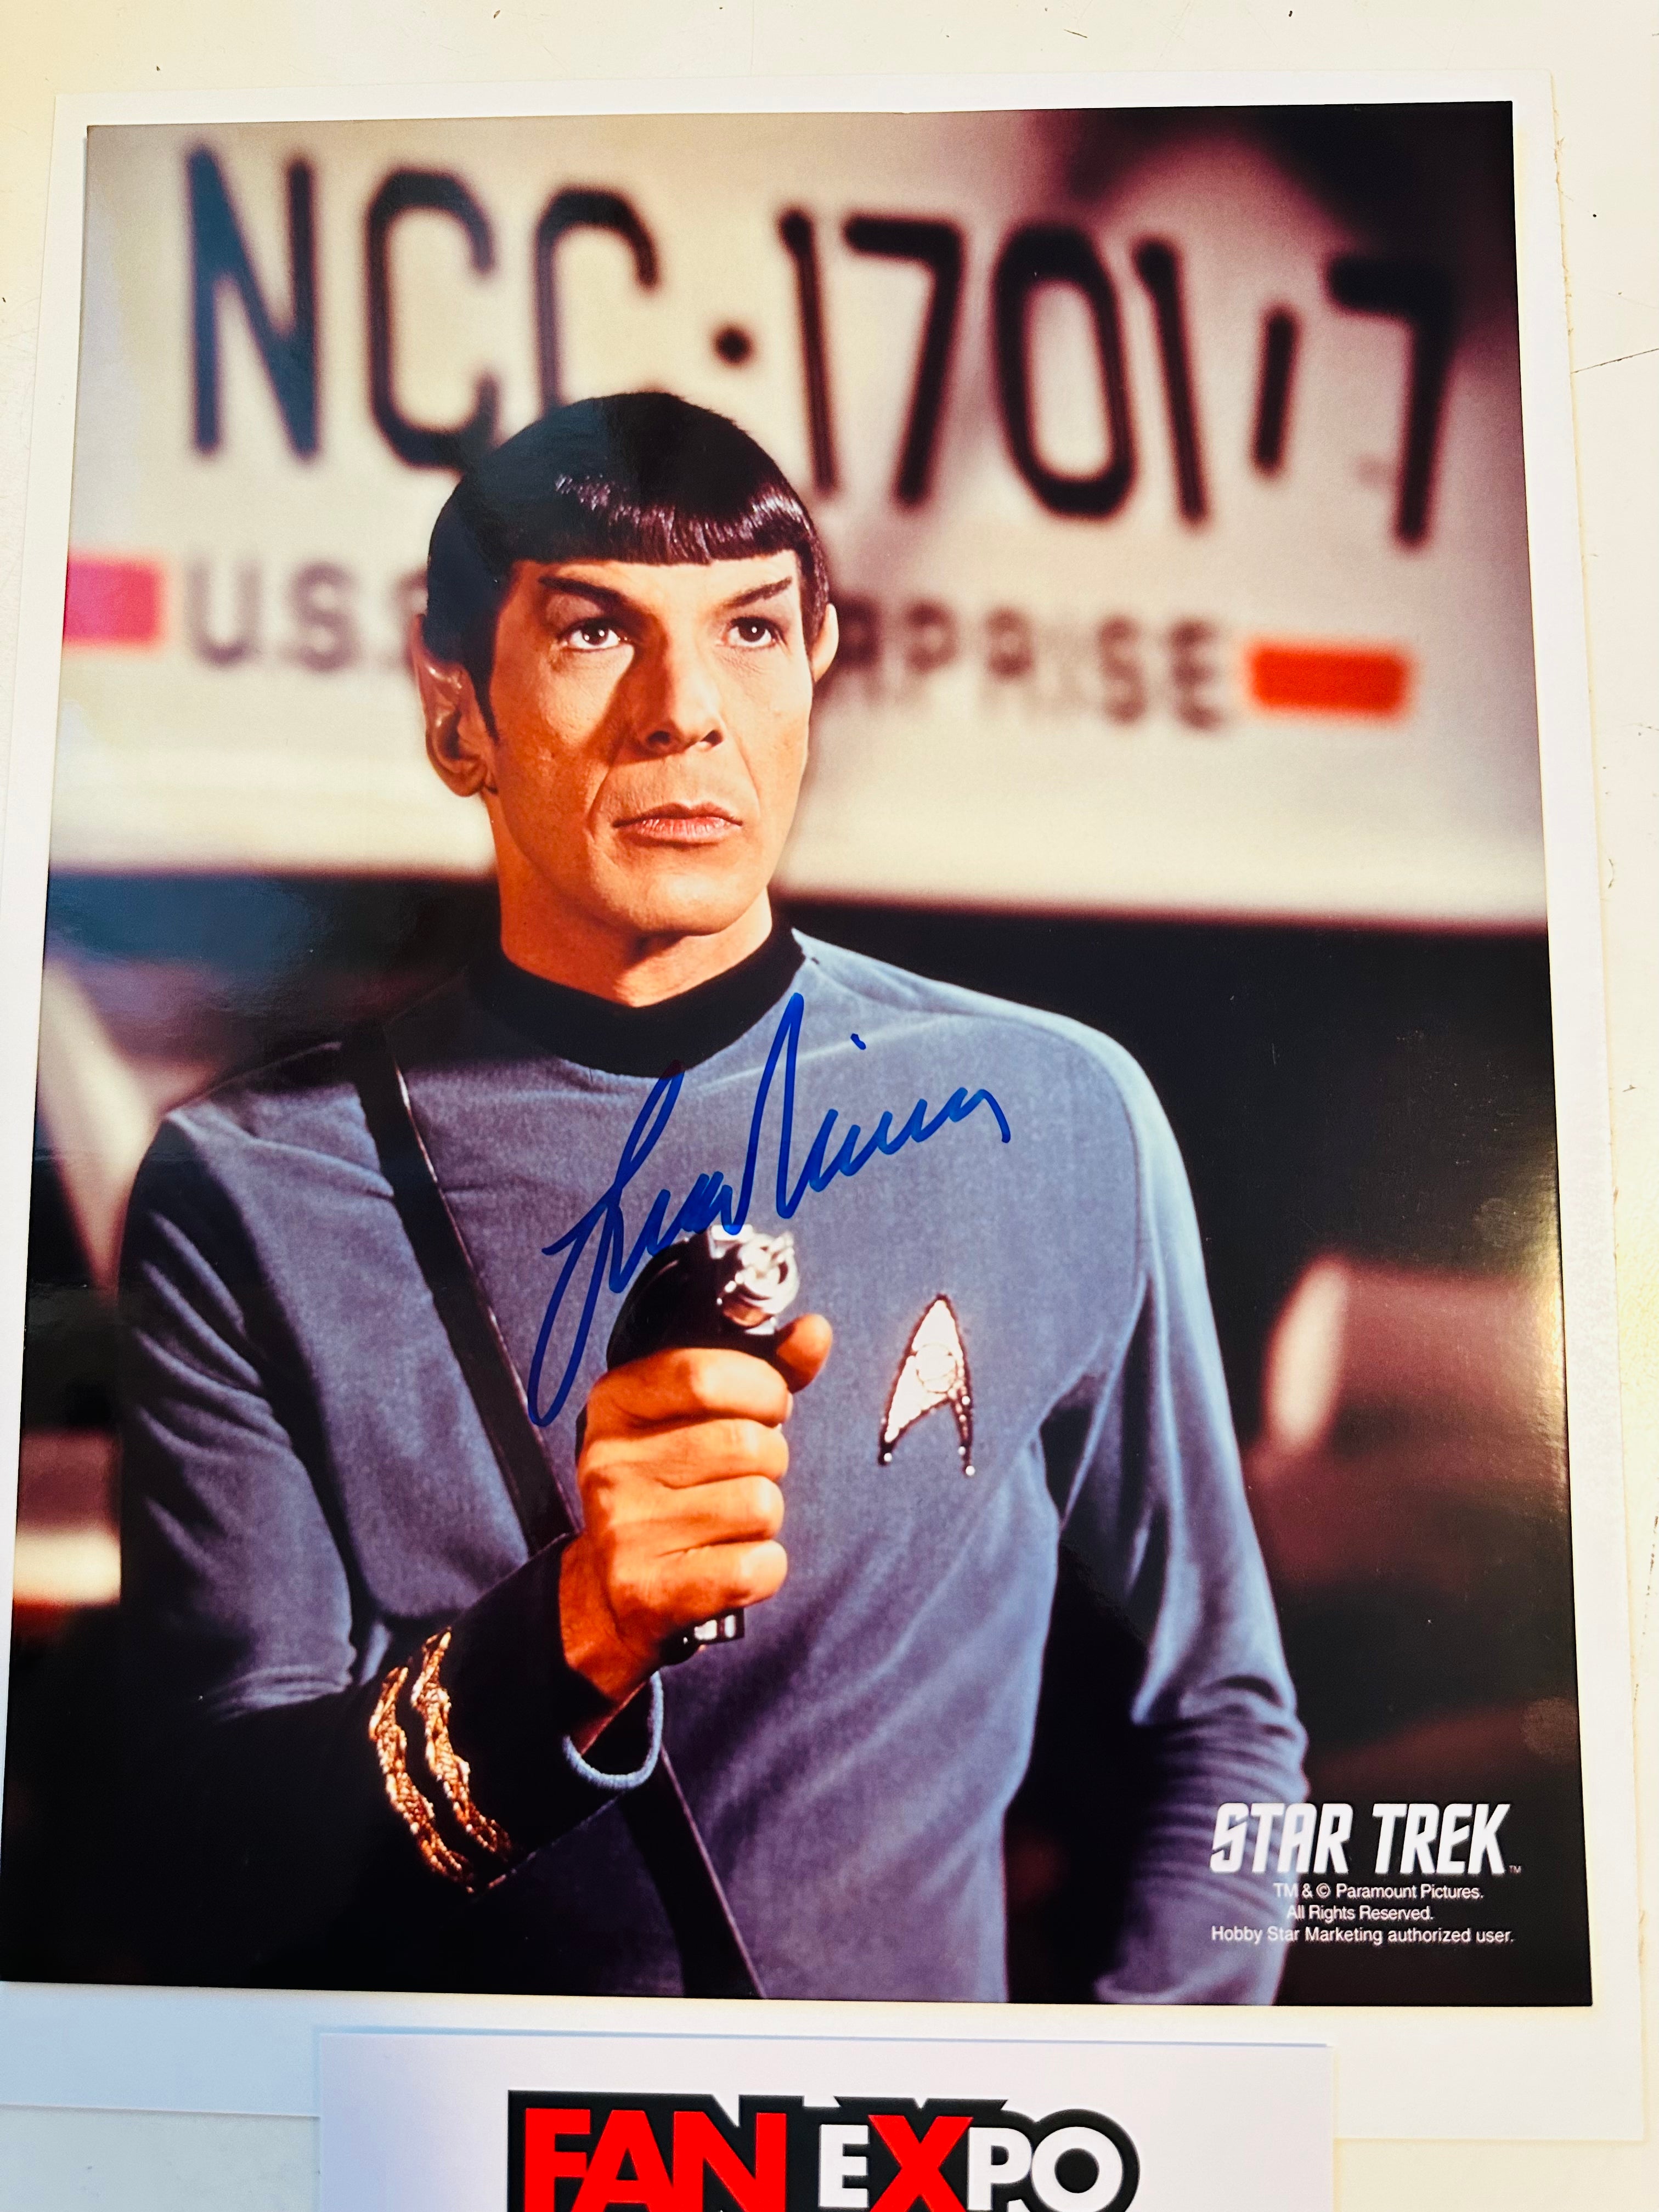 Star Trek Leonard Nimoy( Spock ) rare autograph 8x10 photo certified by Fanexpo